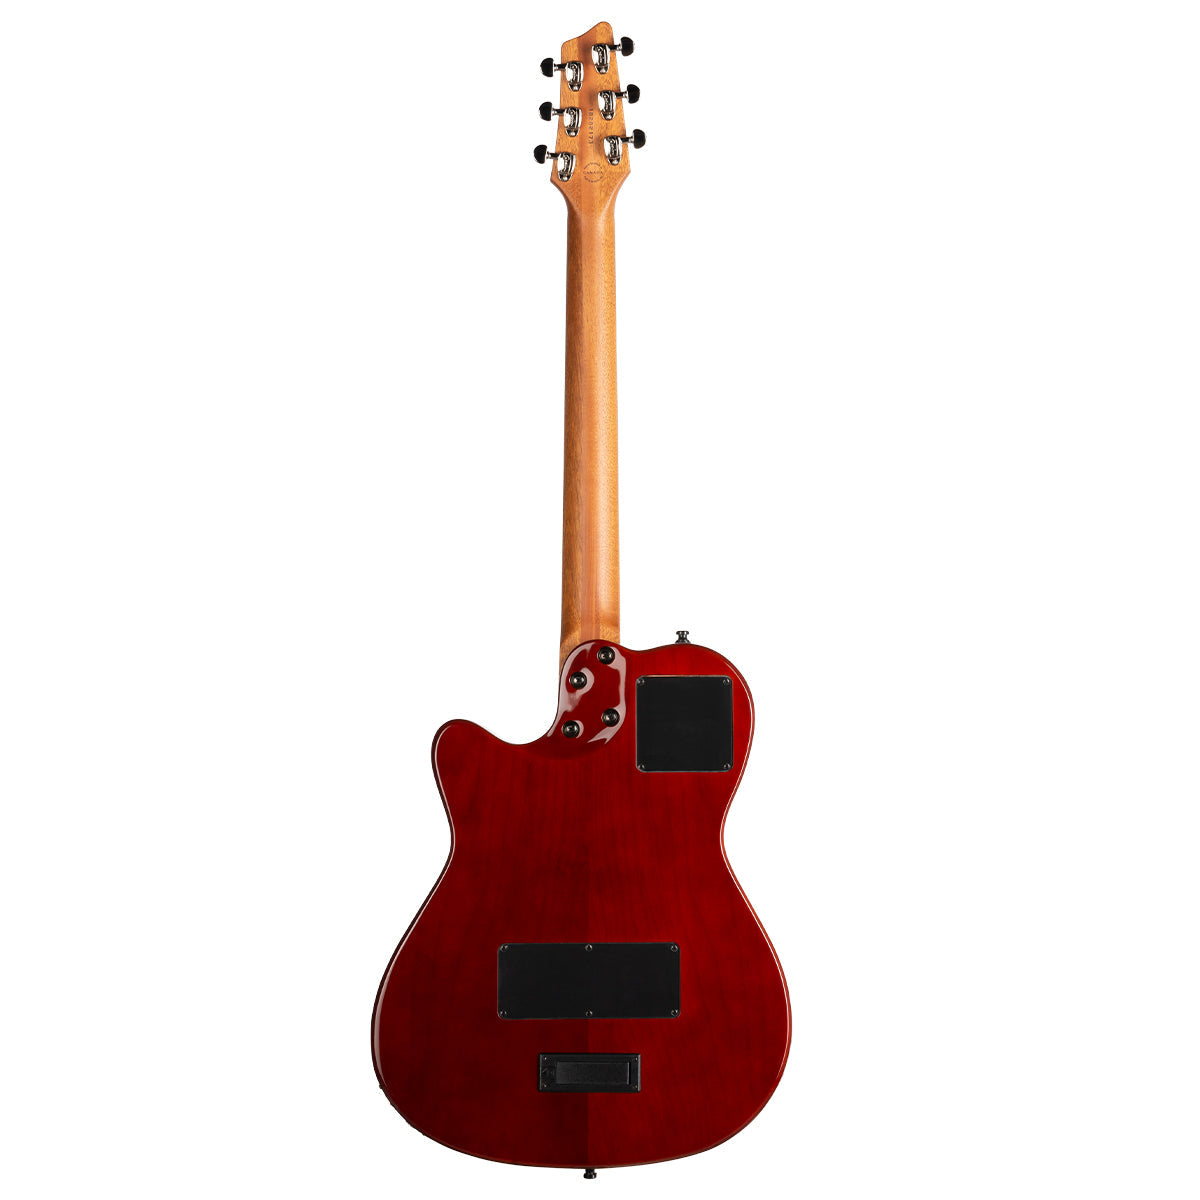 Godin A6 Ultra Electric Guitar ~ Extreme Koa HG, Electric Guitar for sale at Richards Guitars.